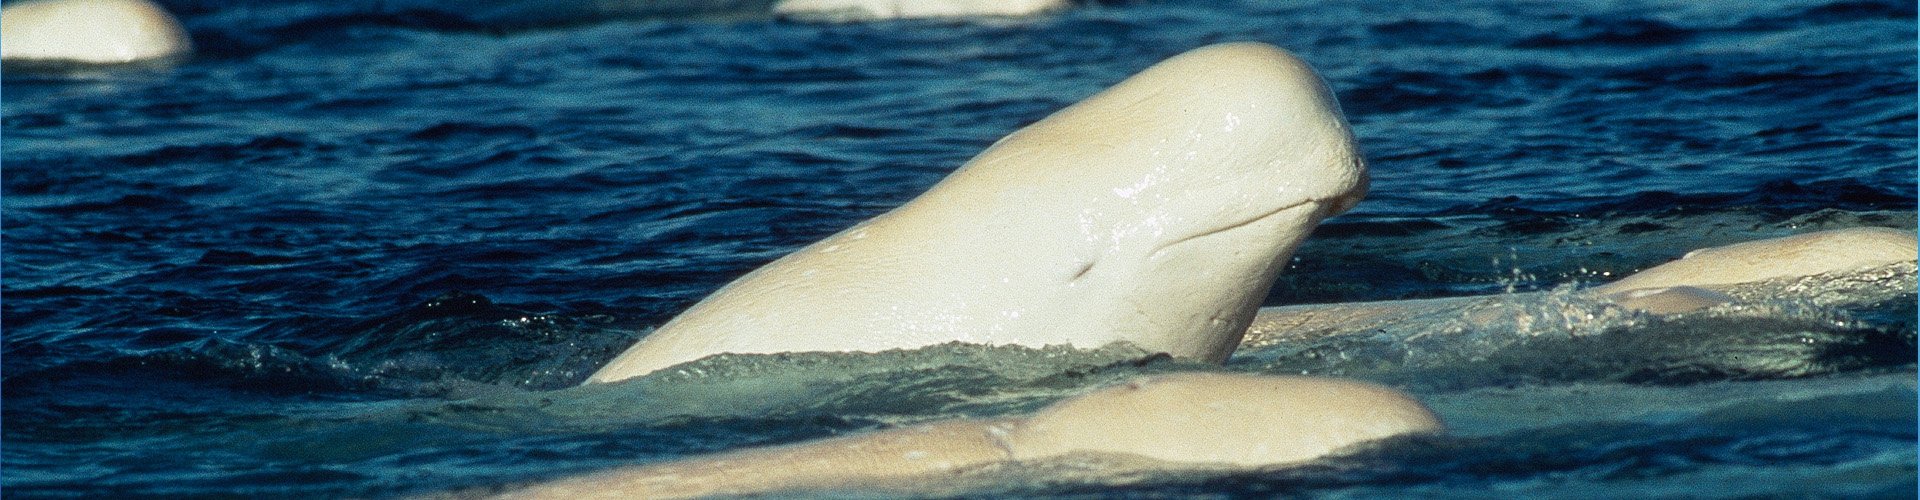 Nordweißwal, Beluga